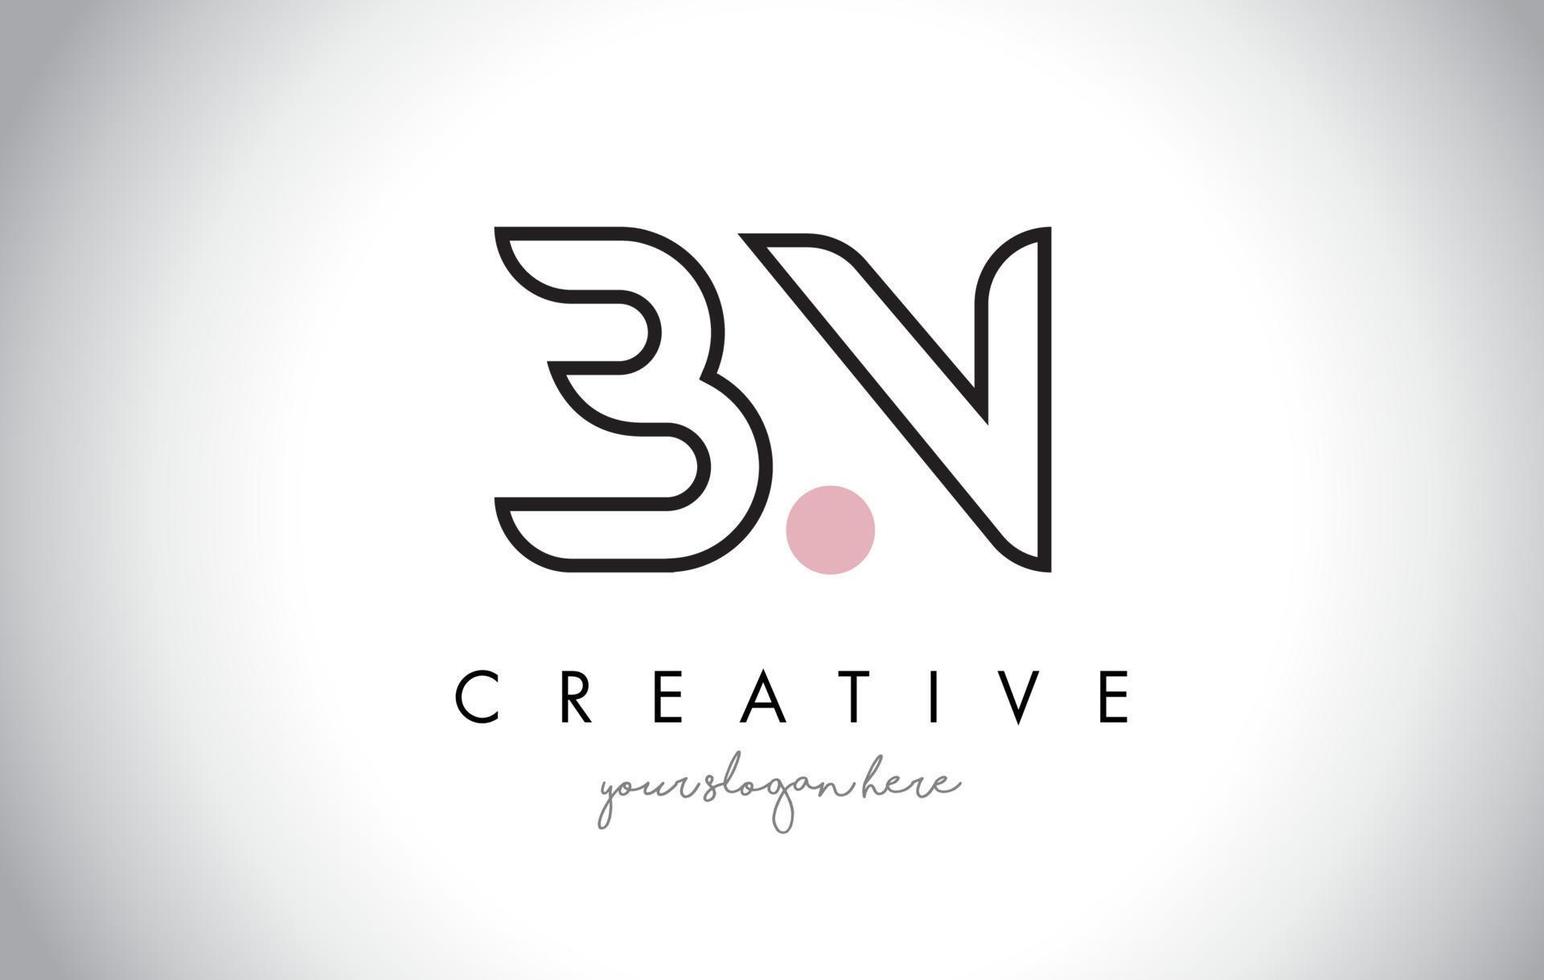 bn letter logo design com criativa moderna tipografia na moda. vetor